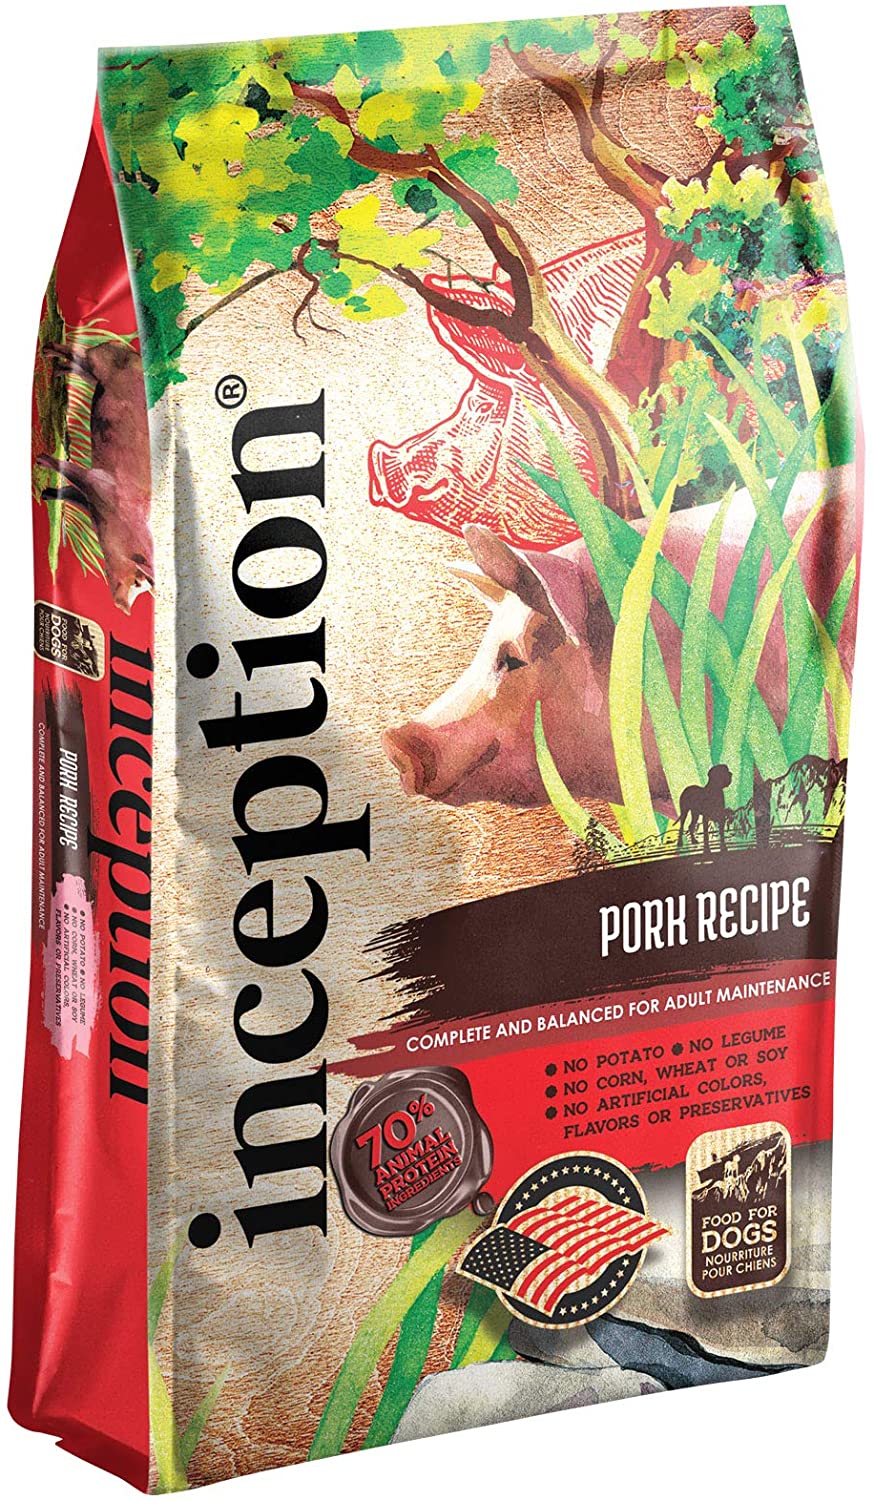 Pets Global Inception Dog Food Pork Recipe Dry Dog Food - 13.5 lb Bag  